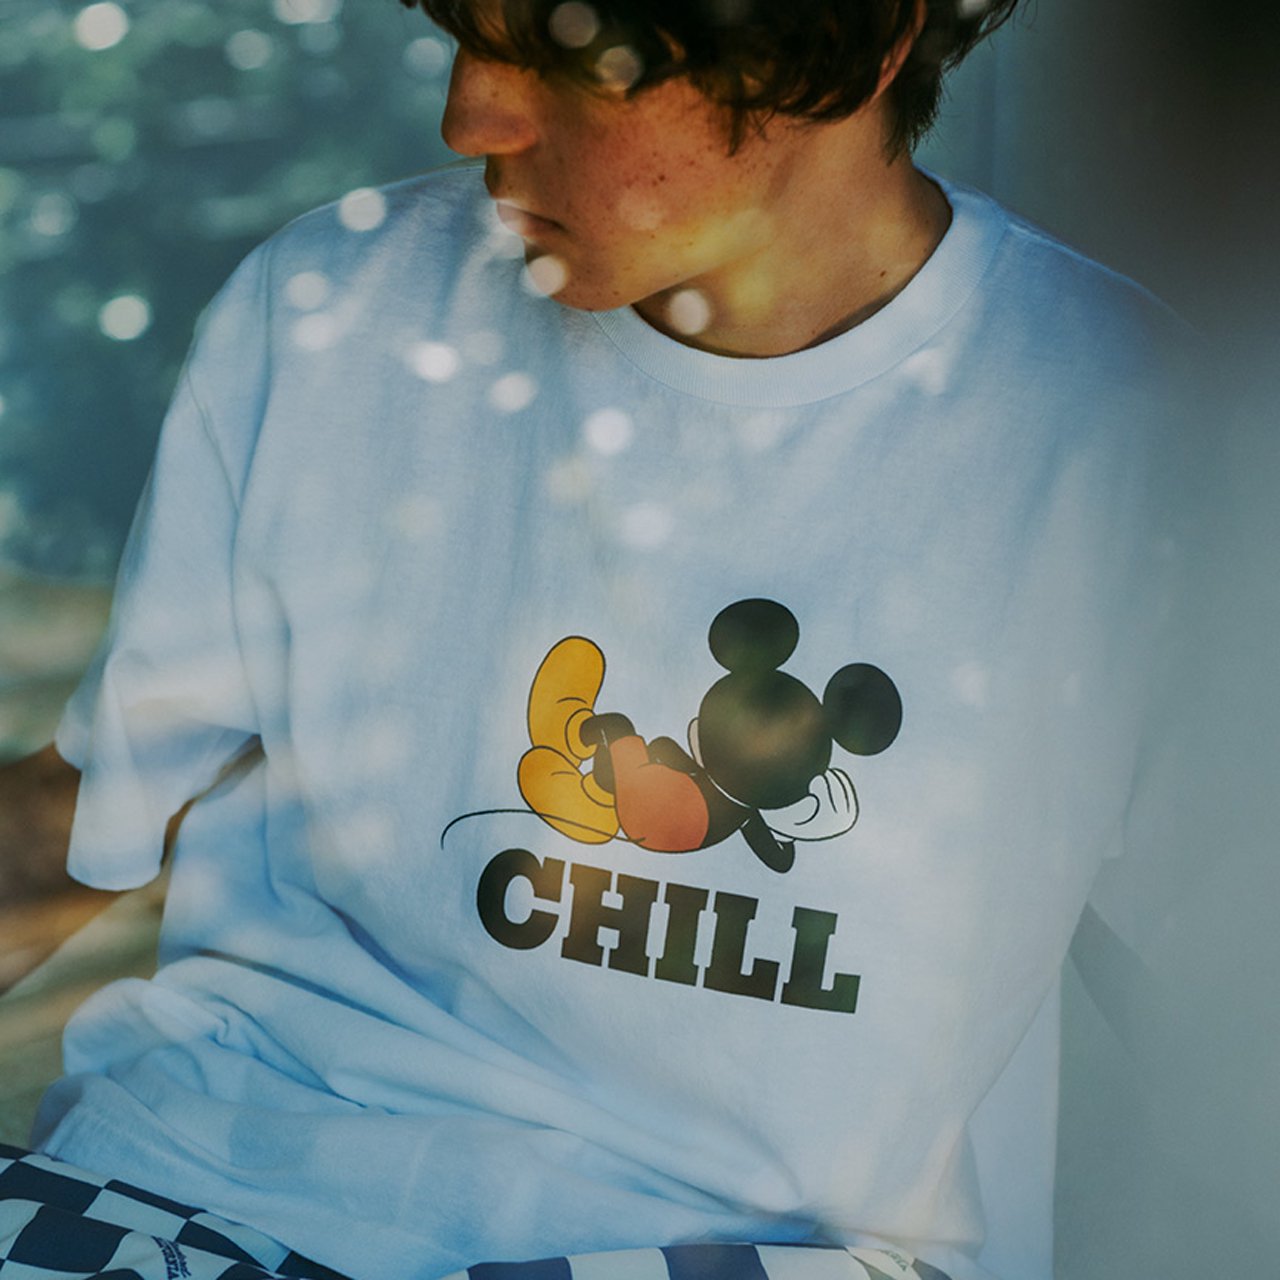 STANDARD CALIFORNIA(スタンダードカリフォルニア)24SS/春夏
Disney×SD Chill Tee
ディズニーコラボレーションTシャツ
ミッキー
半袖Tシャツ

